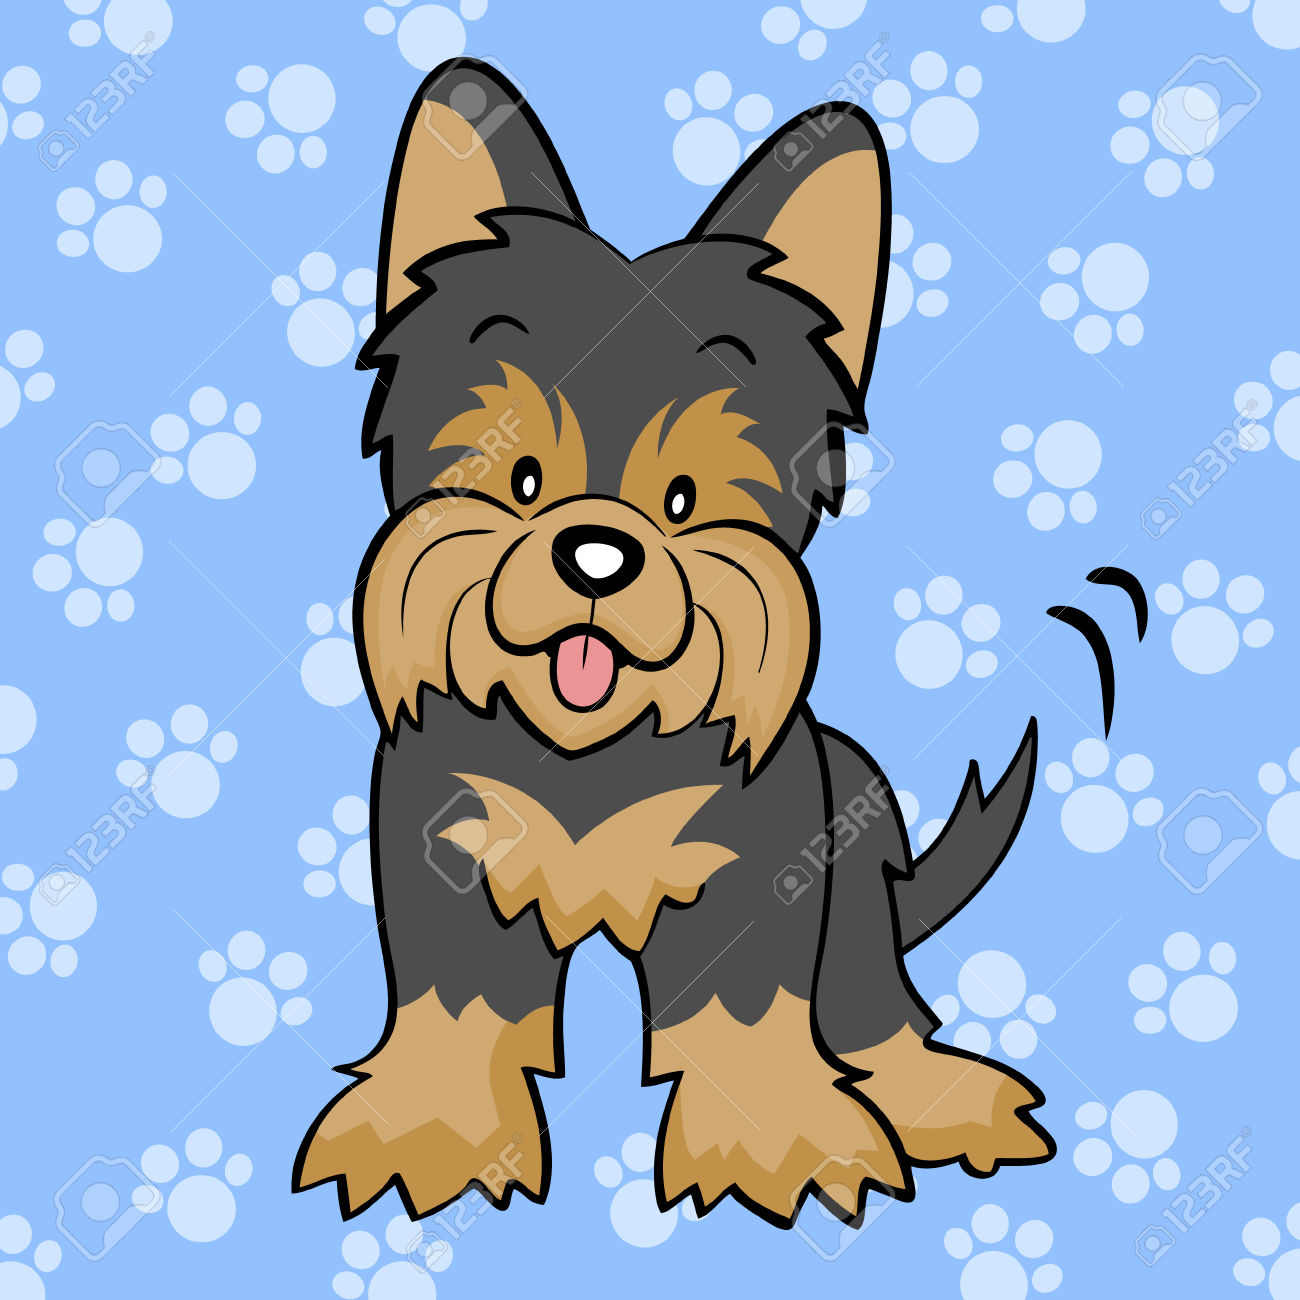 Yrokshire Terrier clipart #12, Download drawings